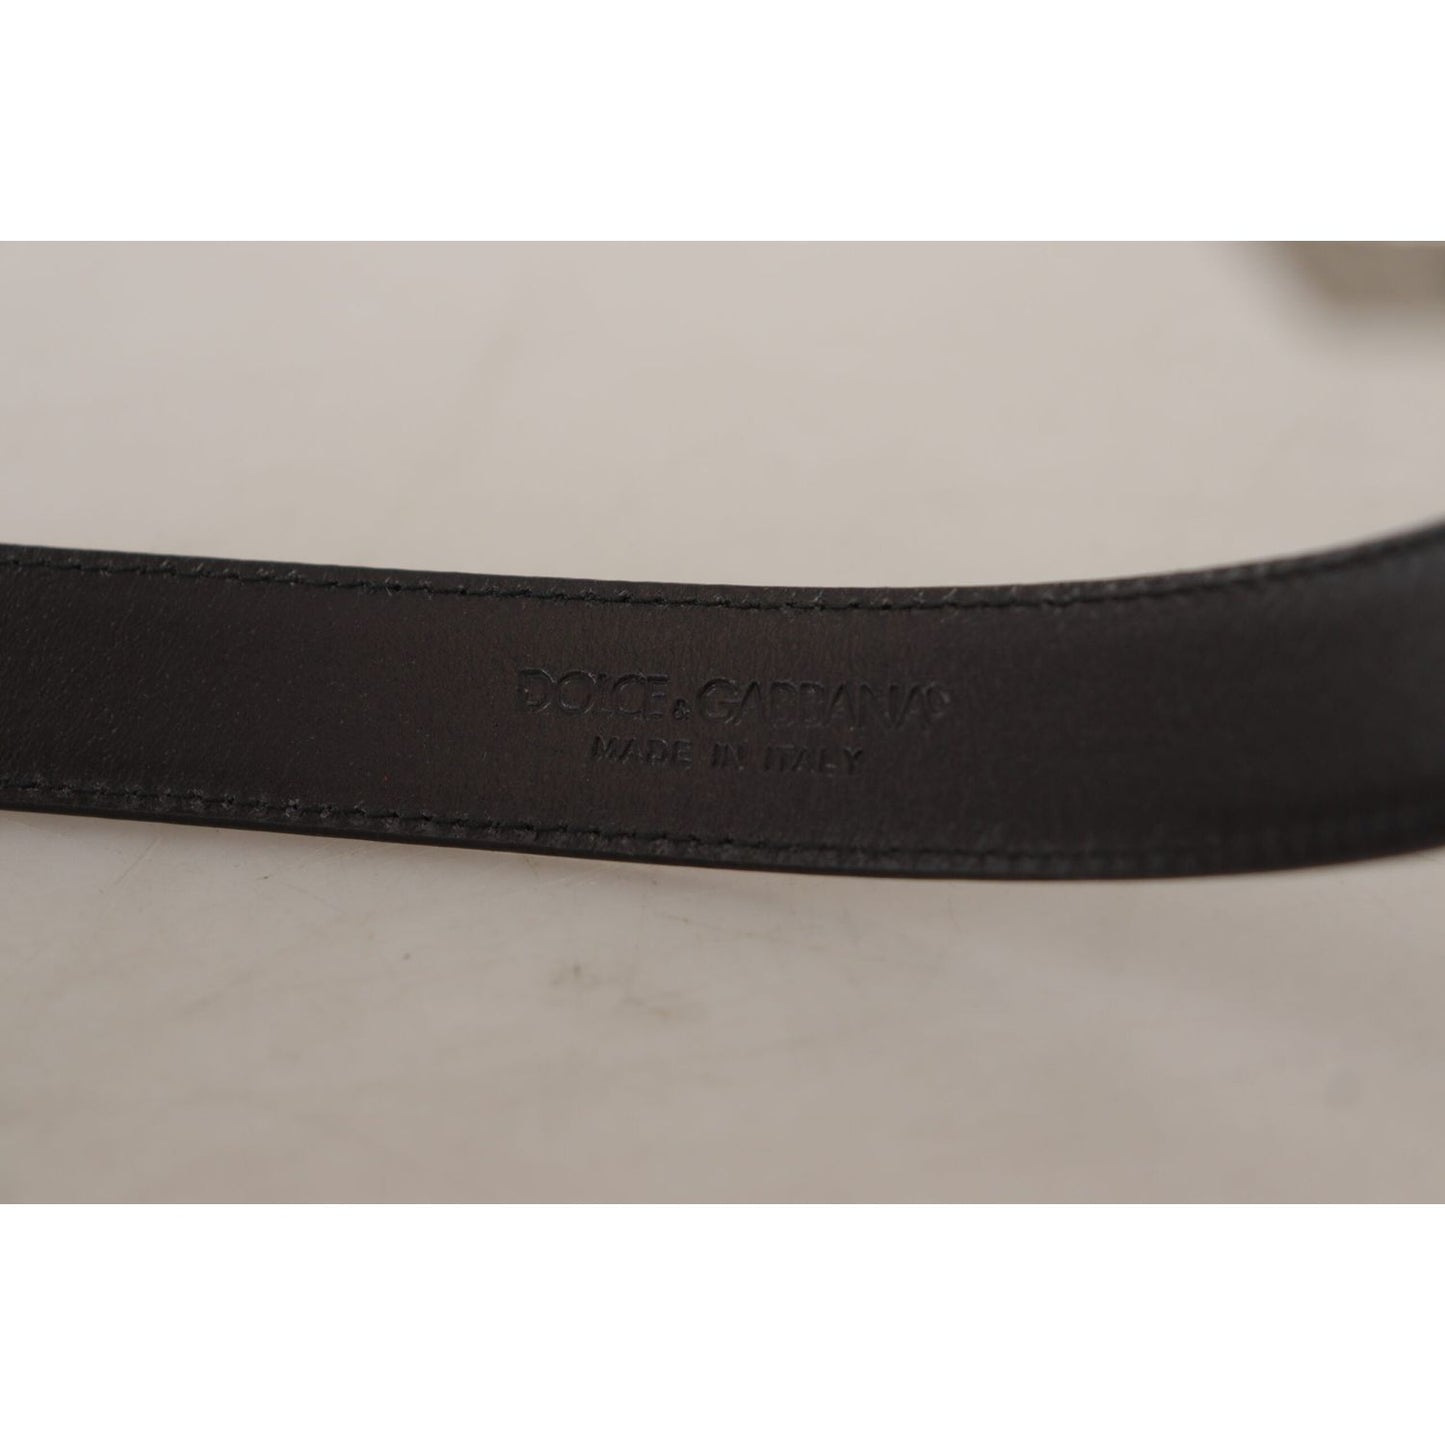 Dolce & Gabbana Sleek Black Leather Belt with Metal Buckle black-calf-leather-logo-engraved-metal-buckle-belt-5